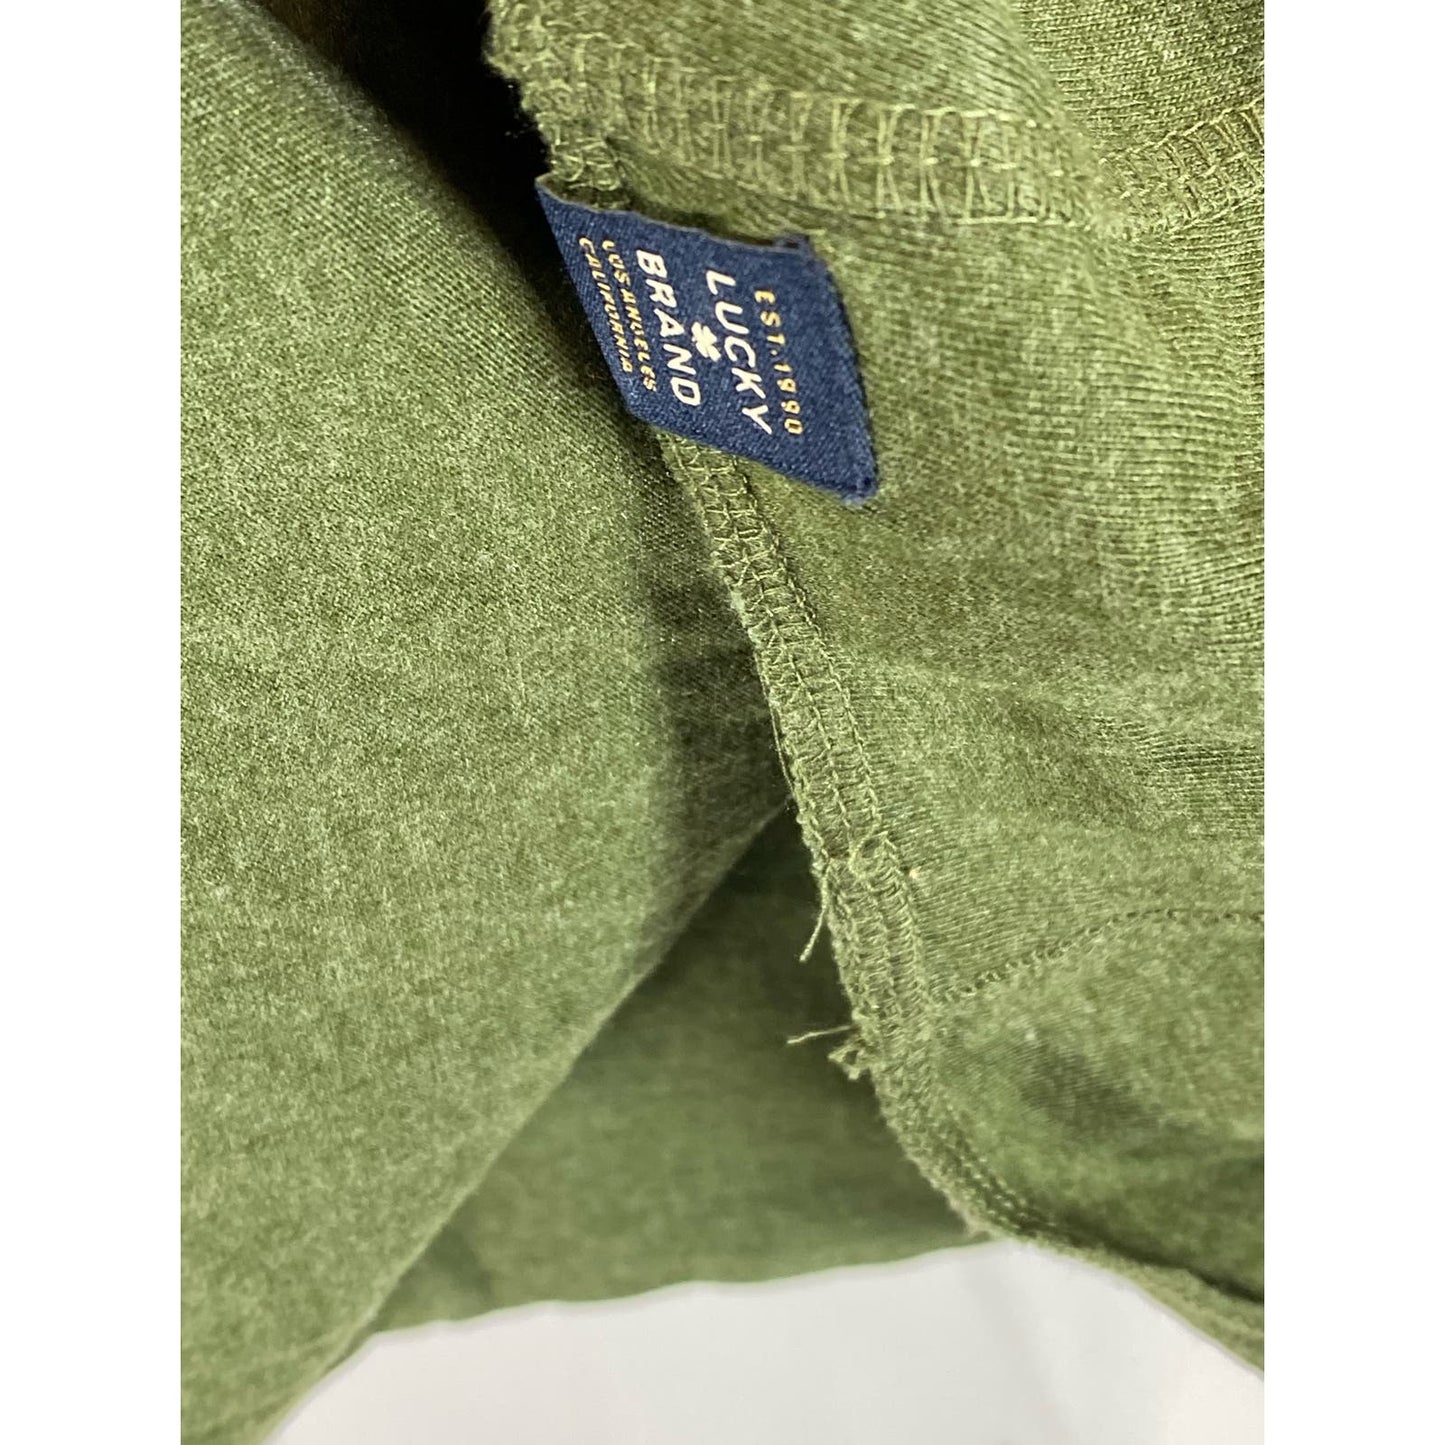 LUCKY BRAND Men's Green Colorblock Crewneck Thermal Long Sleeve T-Shirt SZ XL